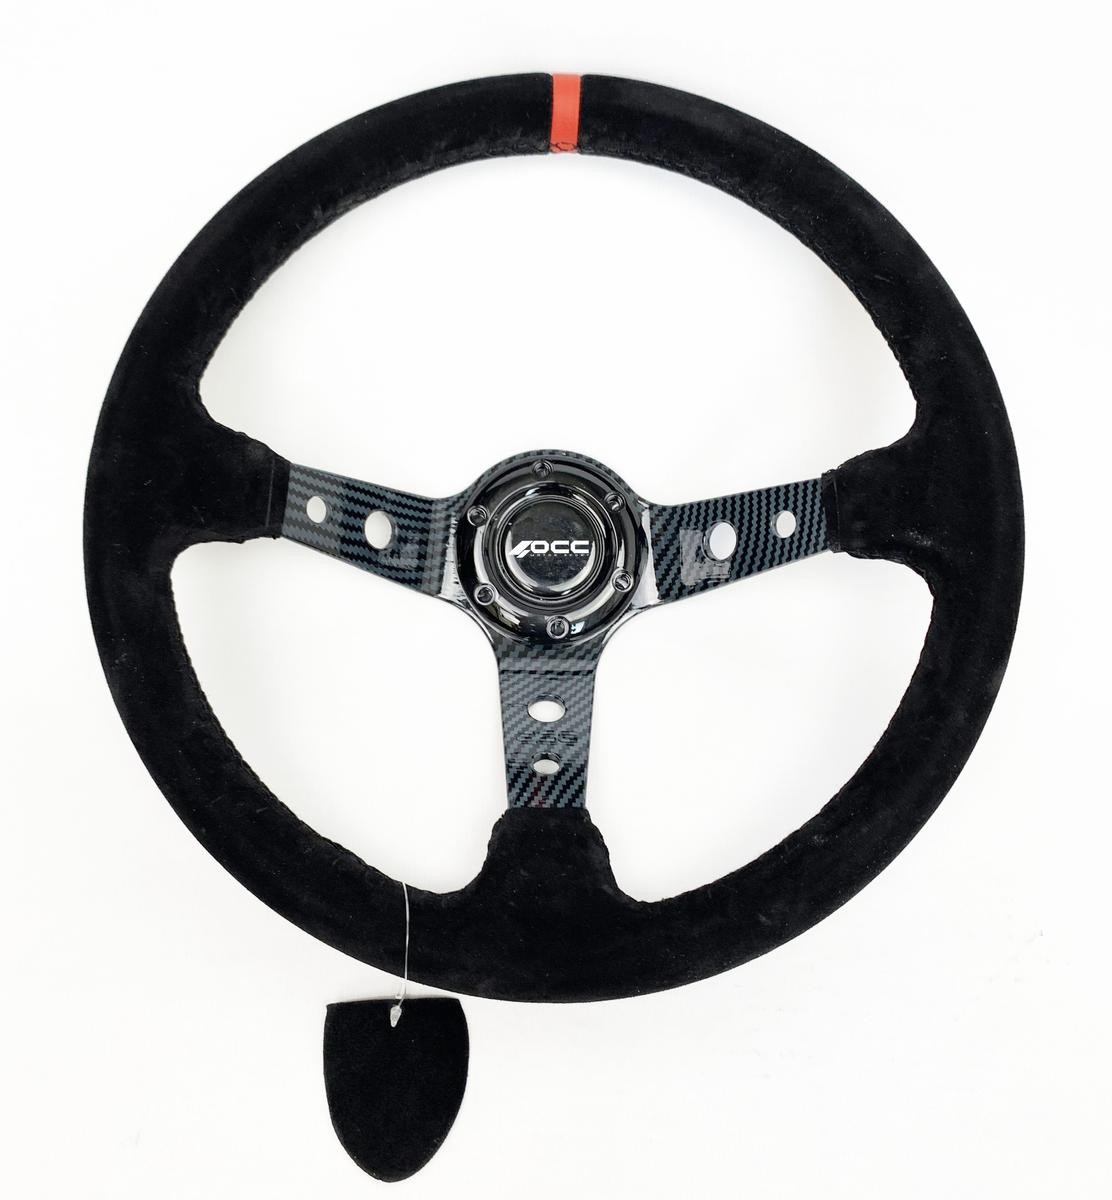 Nissan Sports steering wheel Occ Motorsport OCCVOL005 at a good price